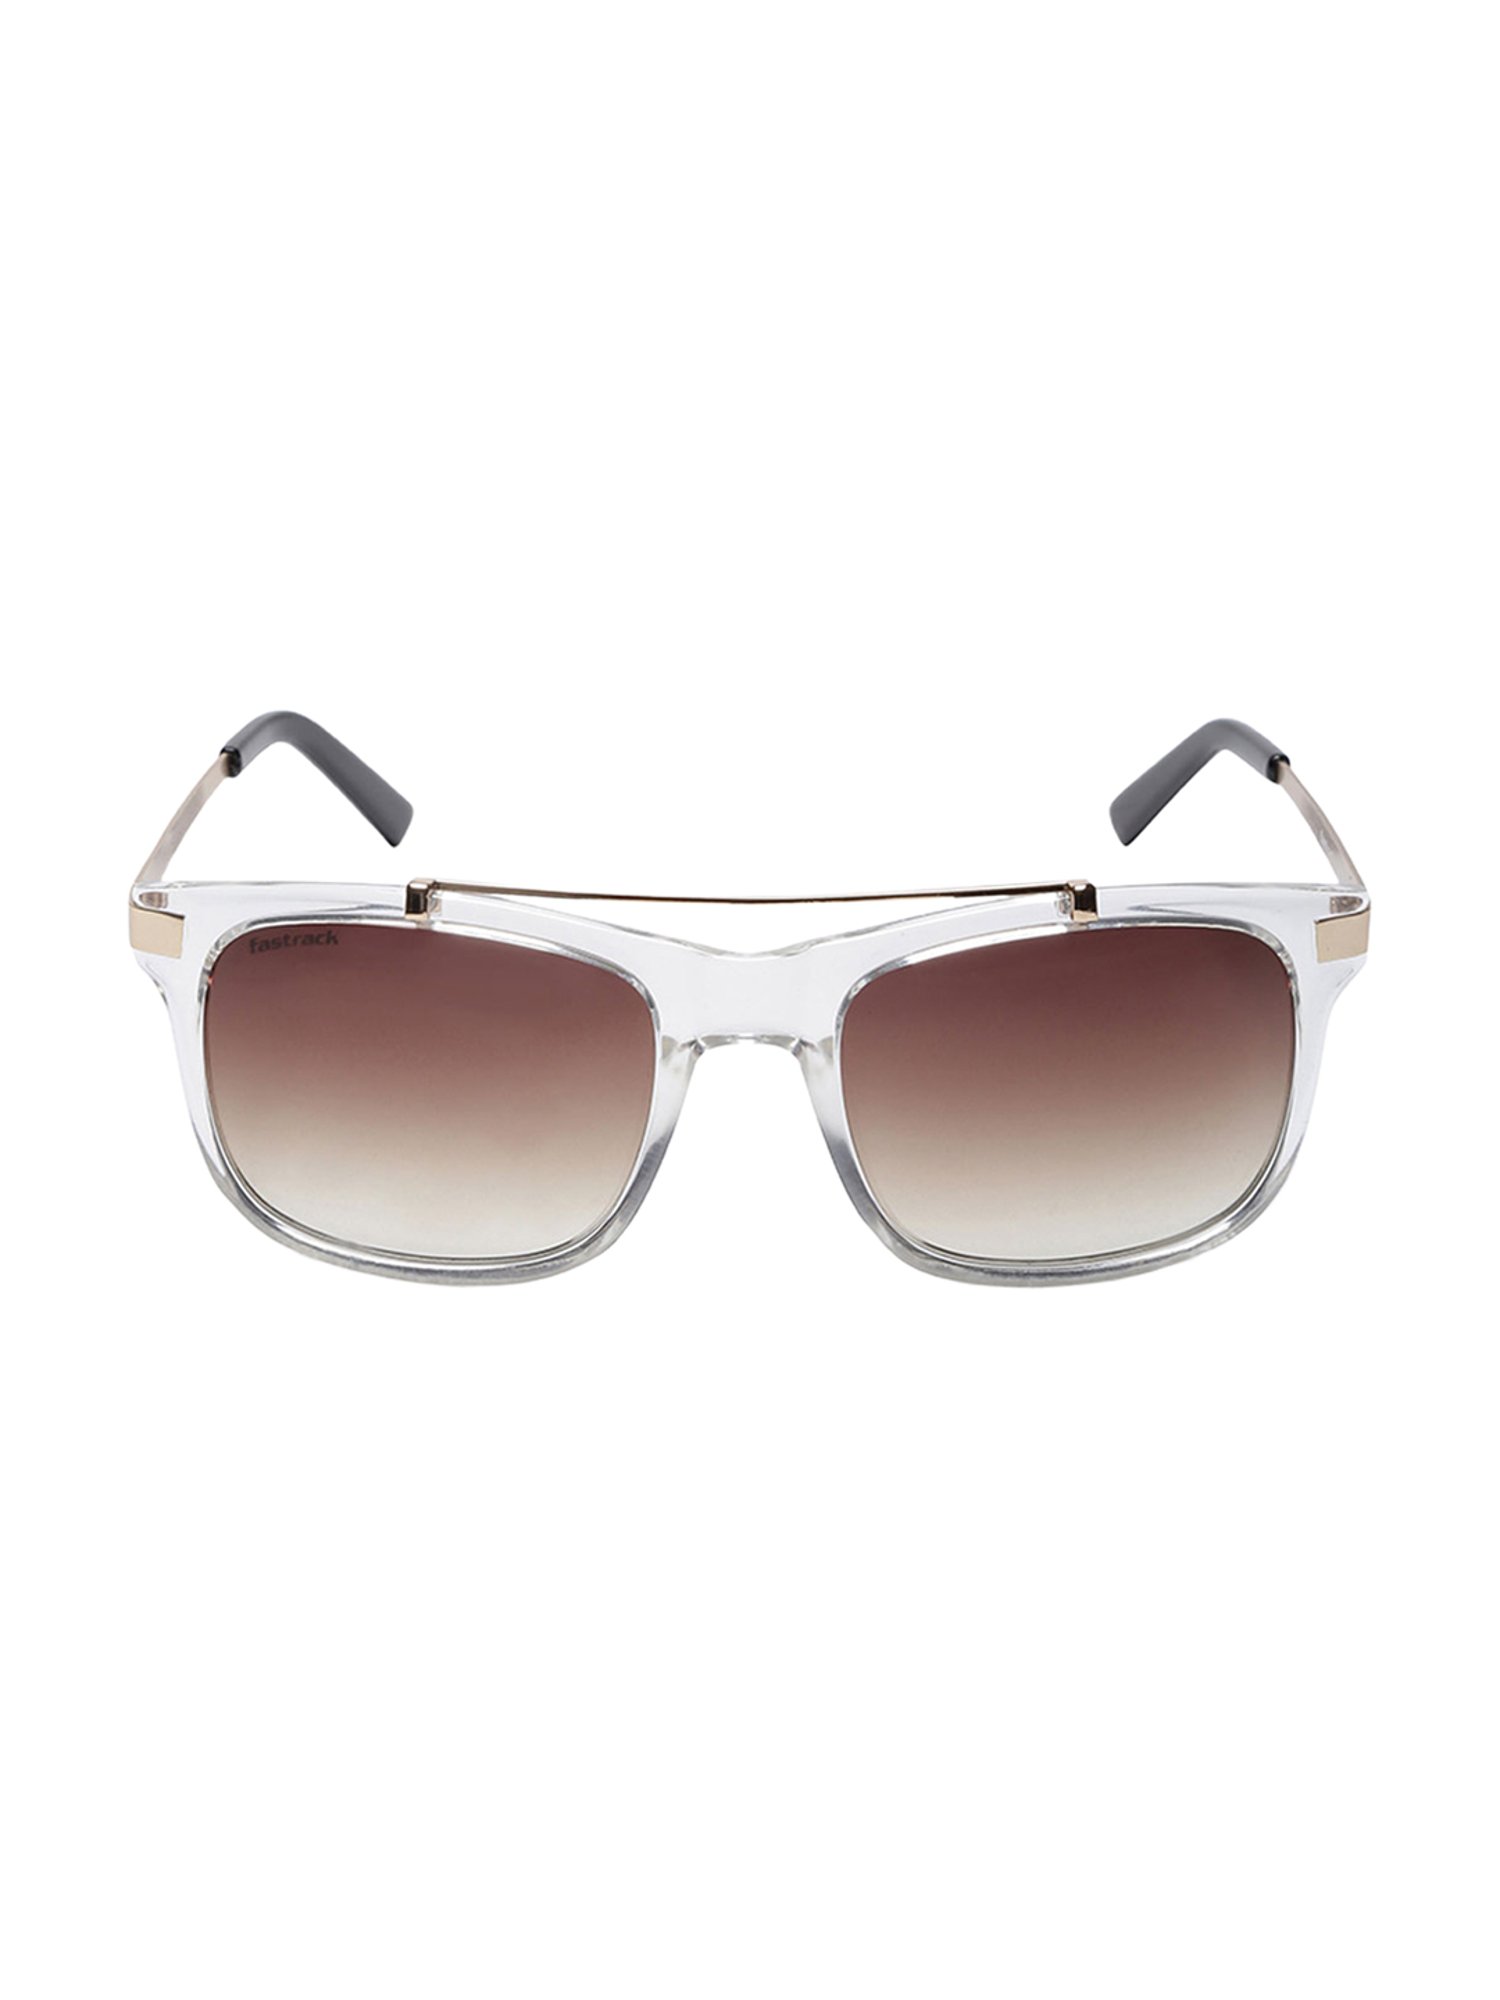 Buy Fastrack Brown Round Sunglasses for Men at Best Price @ Tata CLiQ